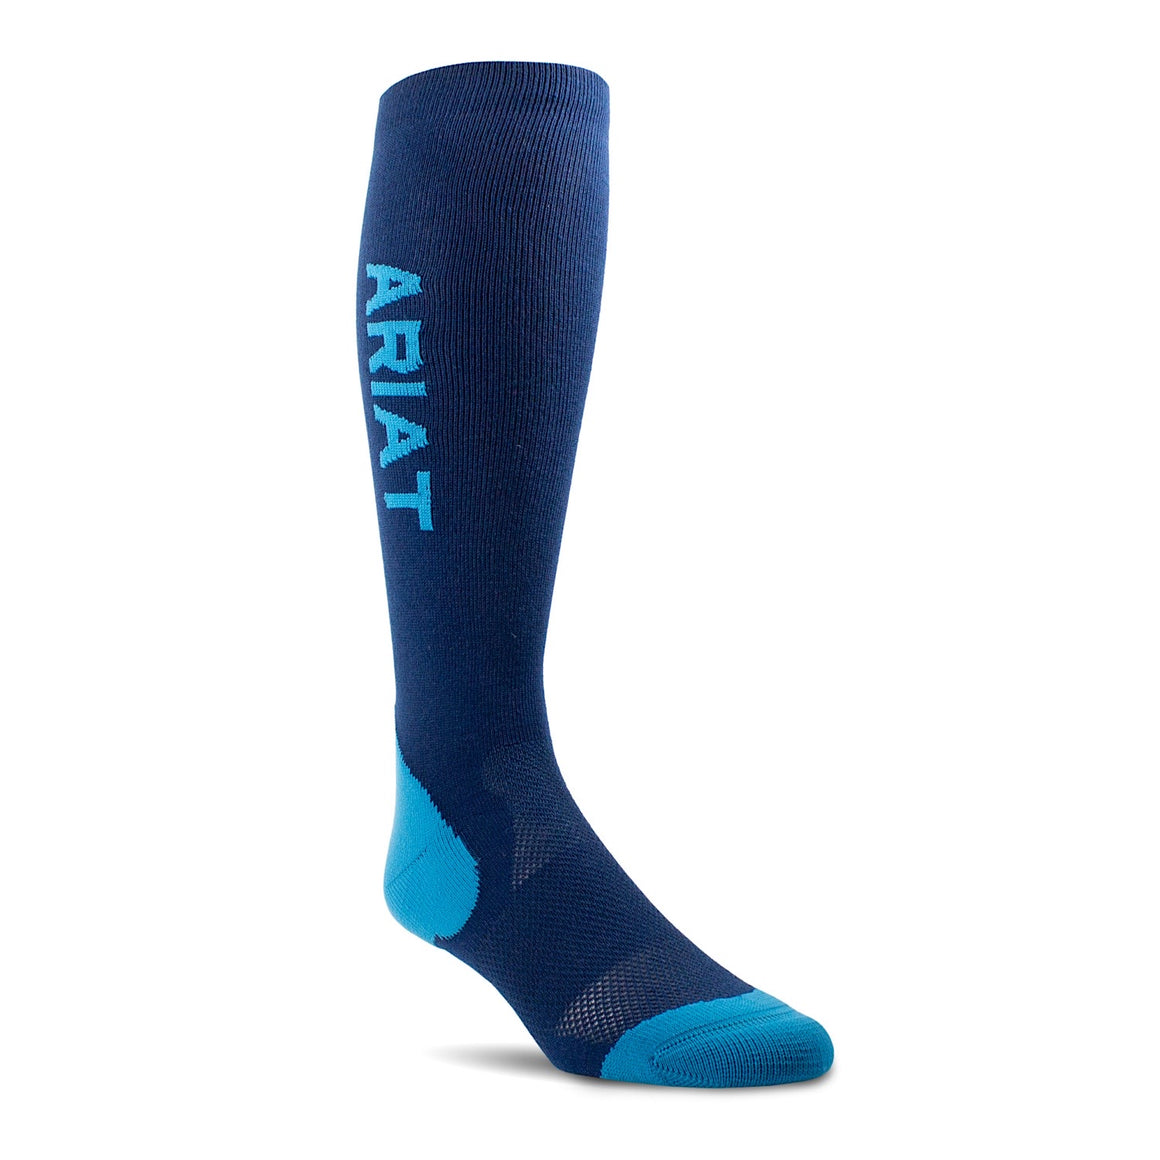 Ariat UniSex AriatTek Performance Socks Navy/ Mosaic Blue